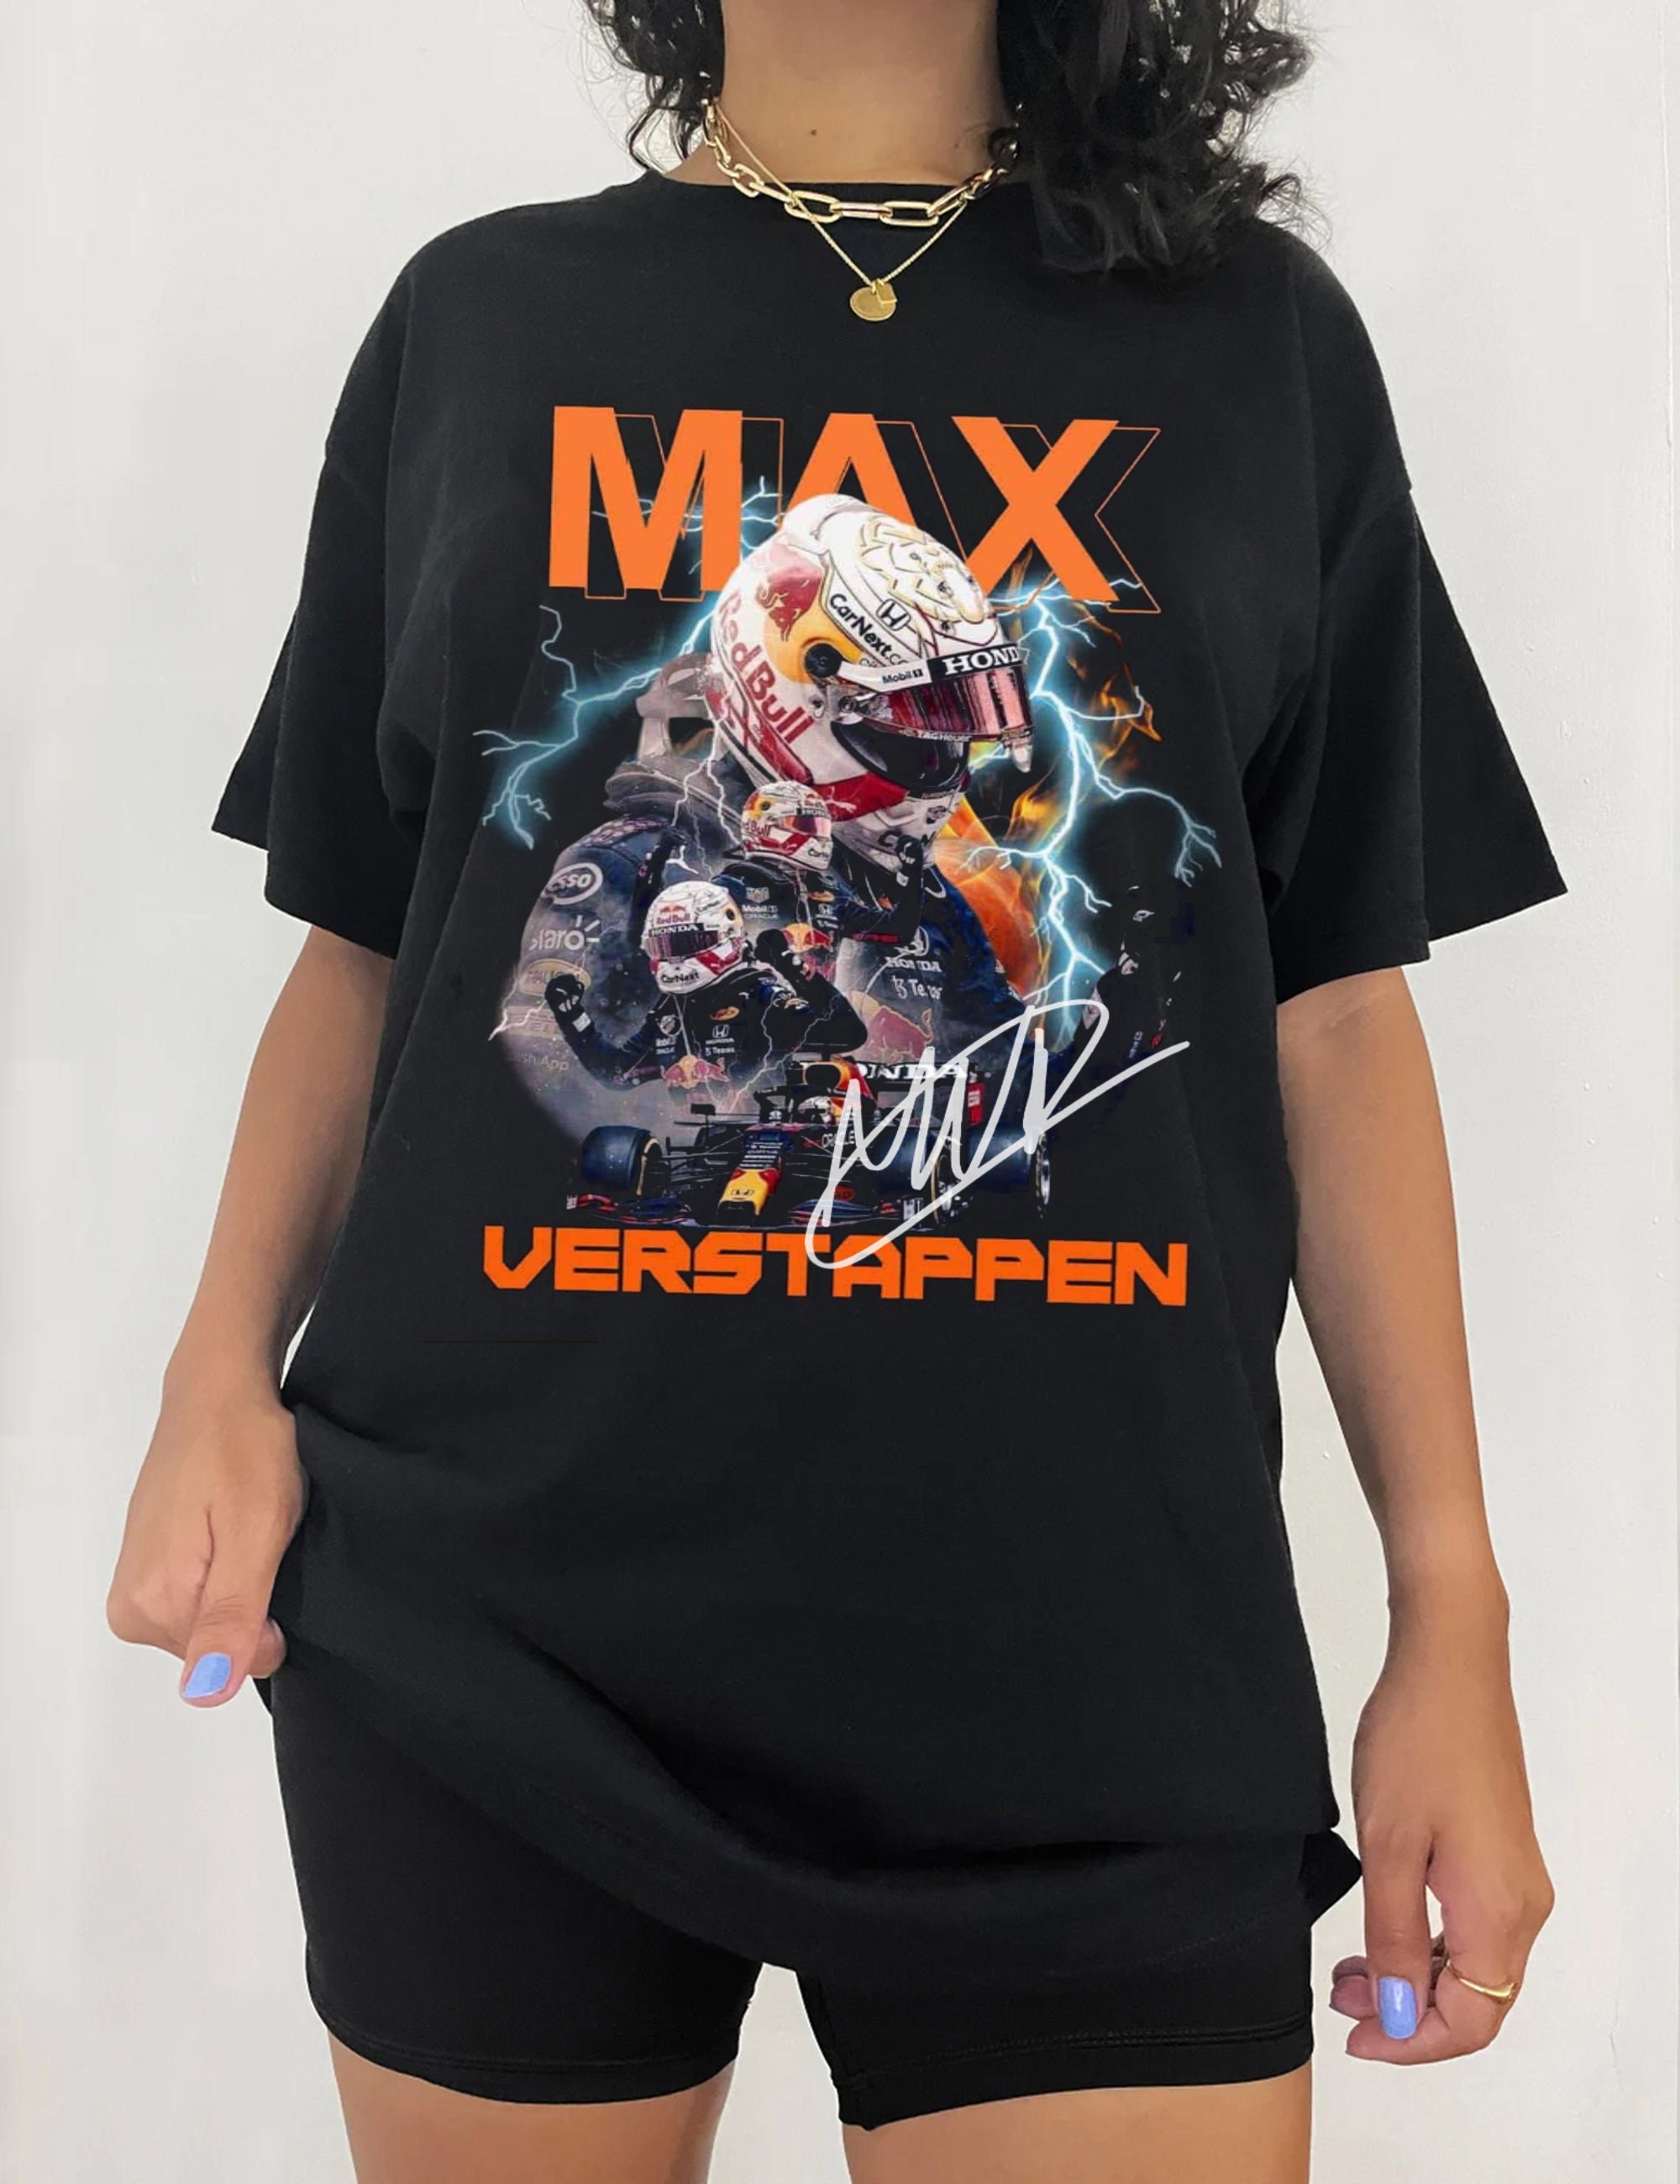 bijtend Verblinding Komst Max verstappen shirt - Etsy Nederland